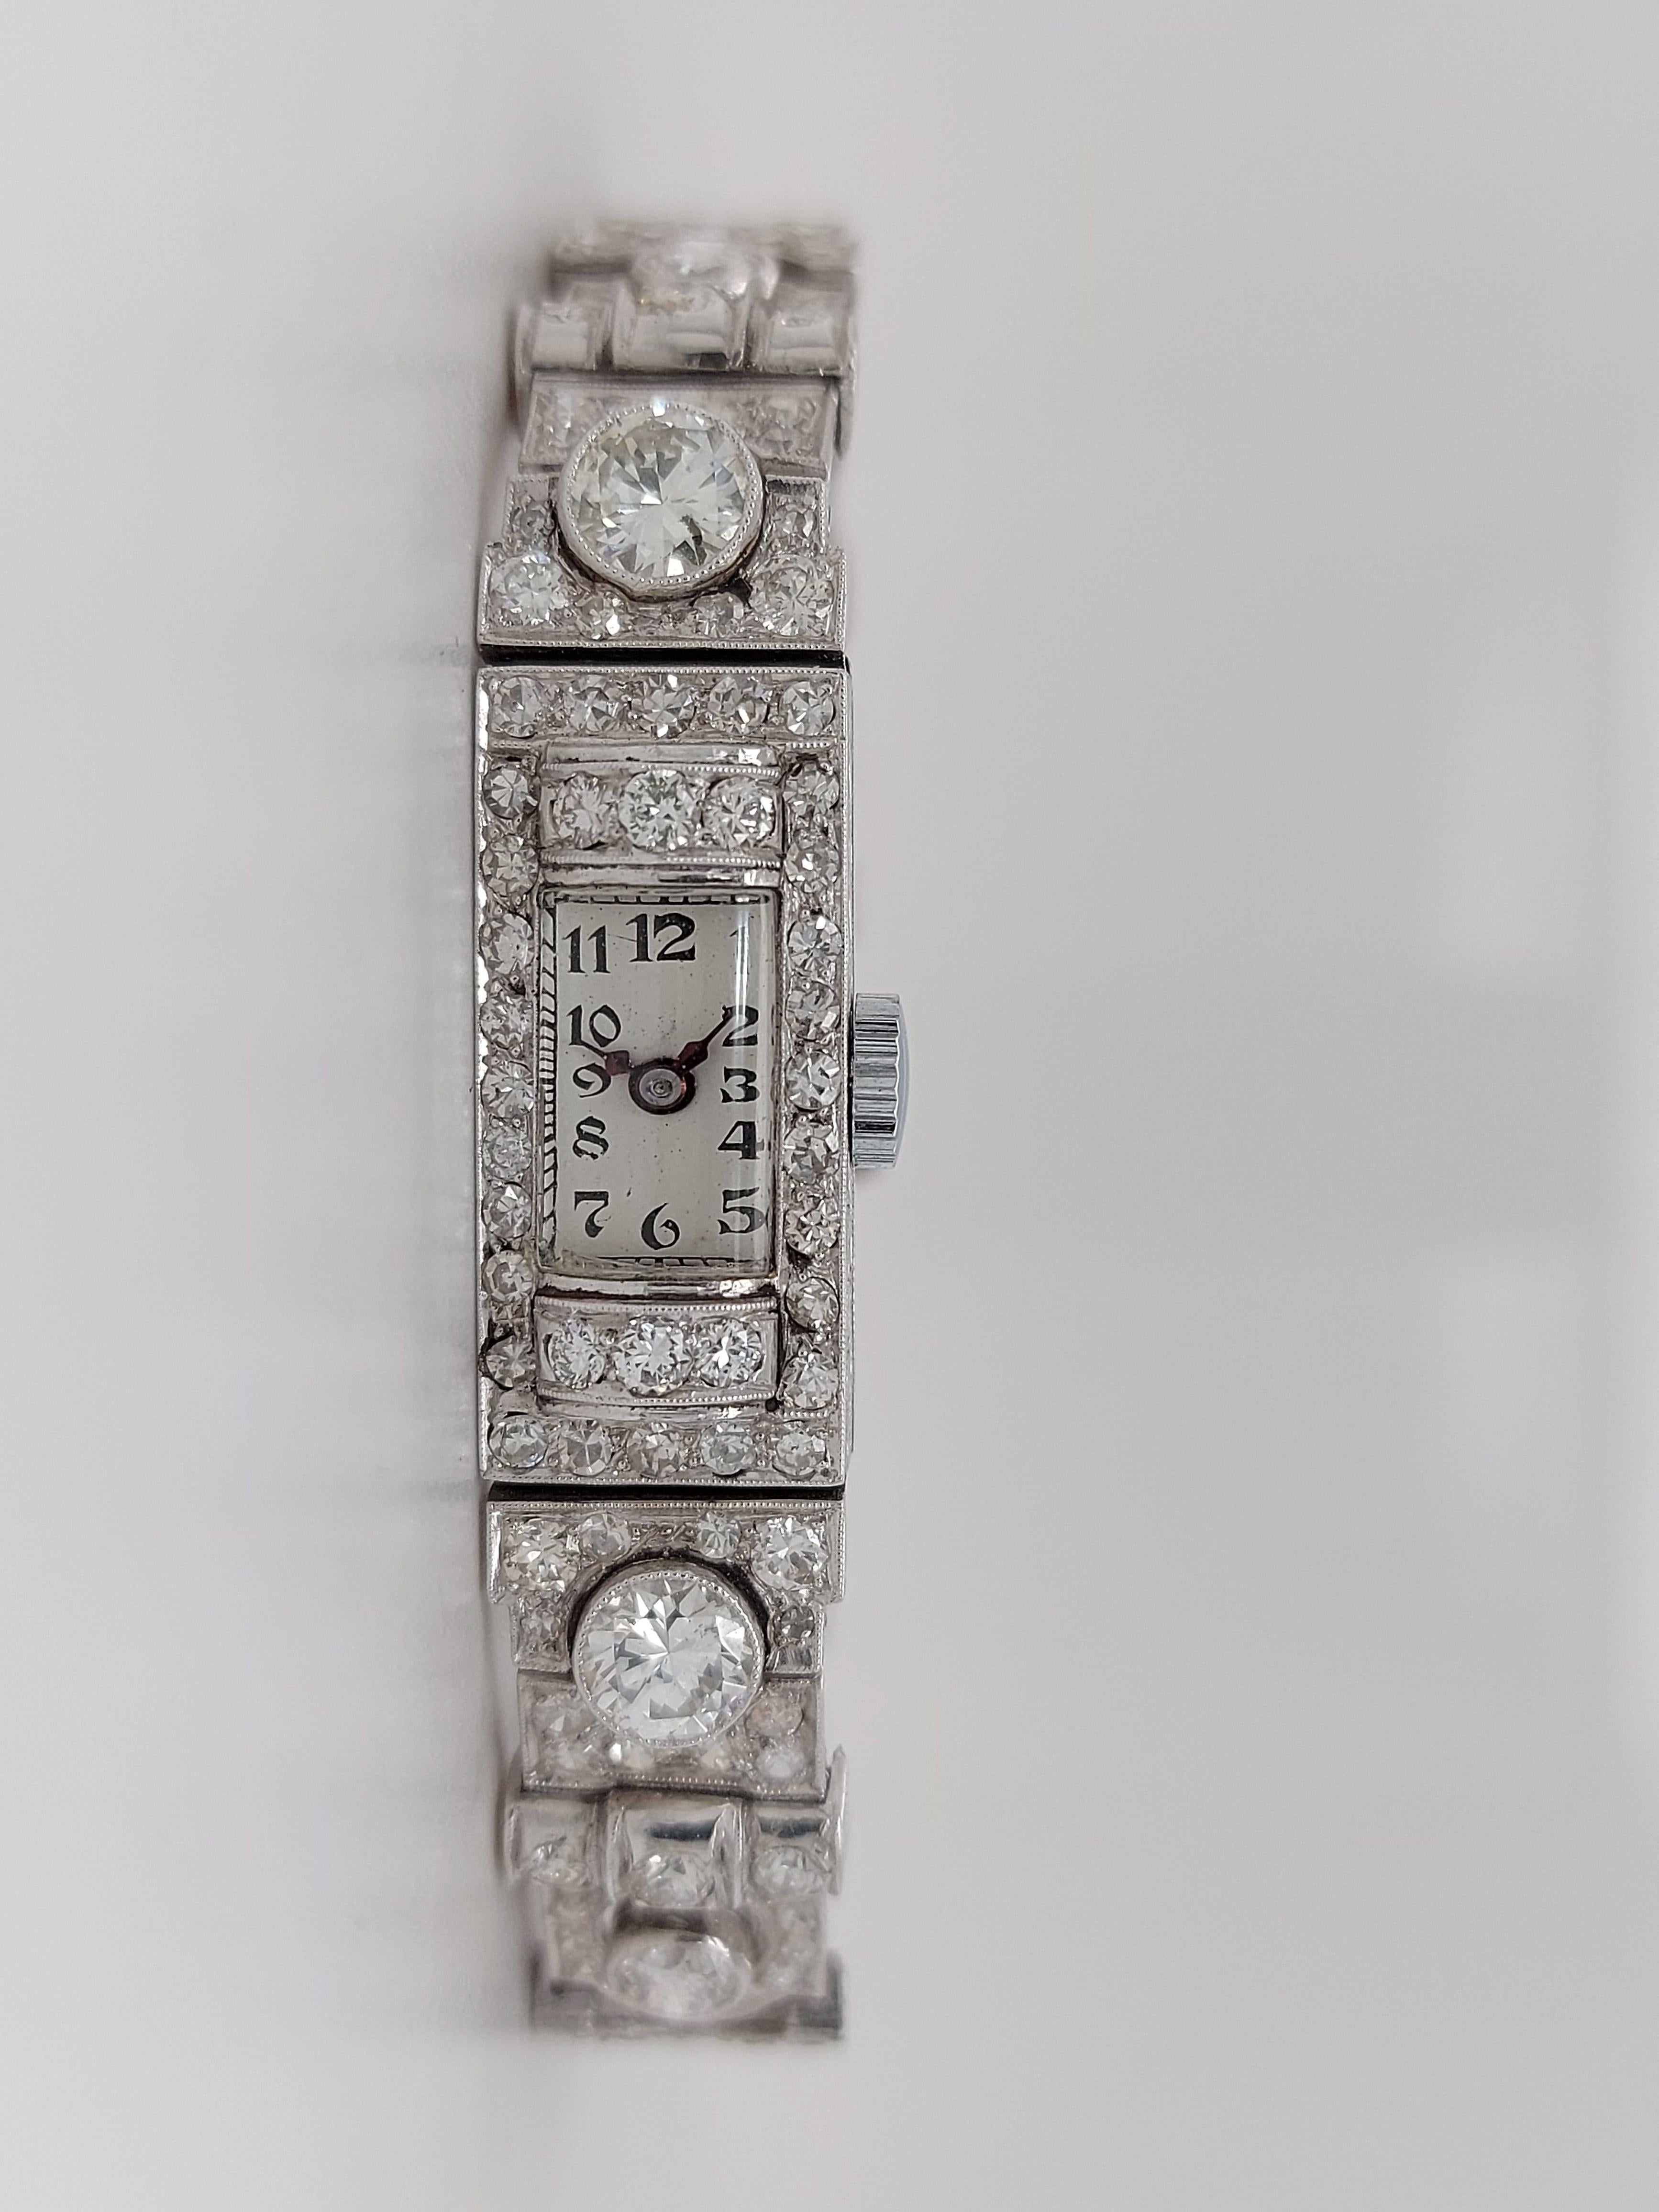 Beautiful Platinum Diamond Art Deco Watch Diamond Bracelet 

Movement:Mechanical Manual Winding 

Functions: Hours, minutes

Material: Platinum

Case: Case length 10 mm x Height 22.5 mm, Dial measurements Length 6.6 x Height 11 mm, sapphire